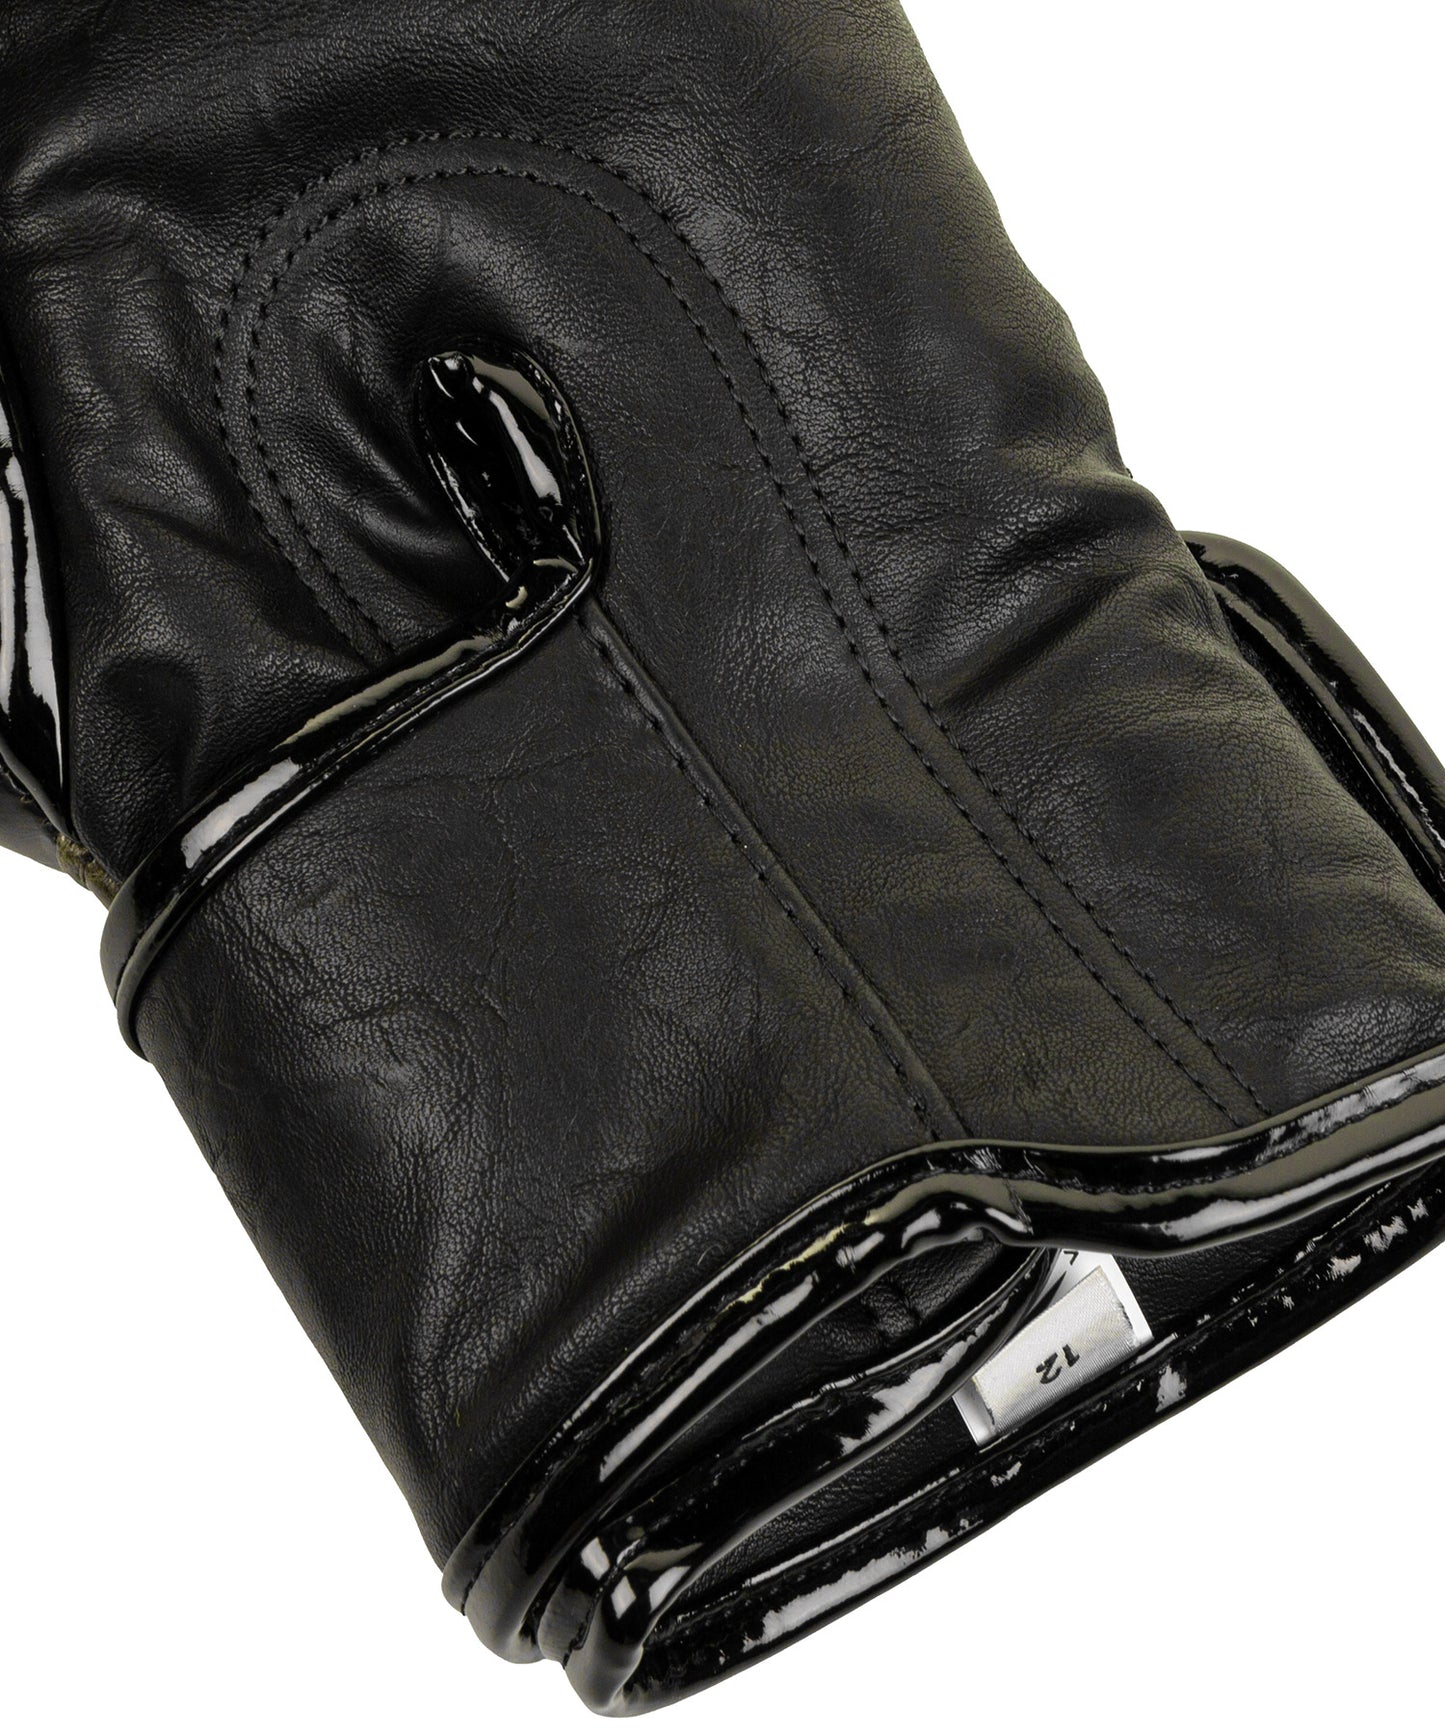 Venum Impact Boxing Gloves - Khaki/Gold